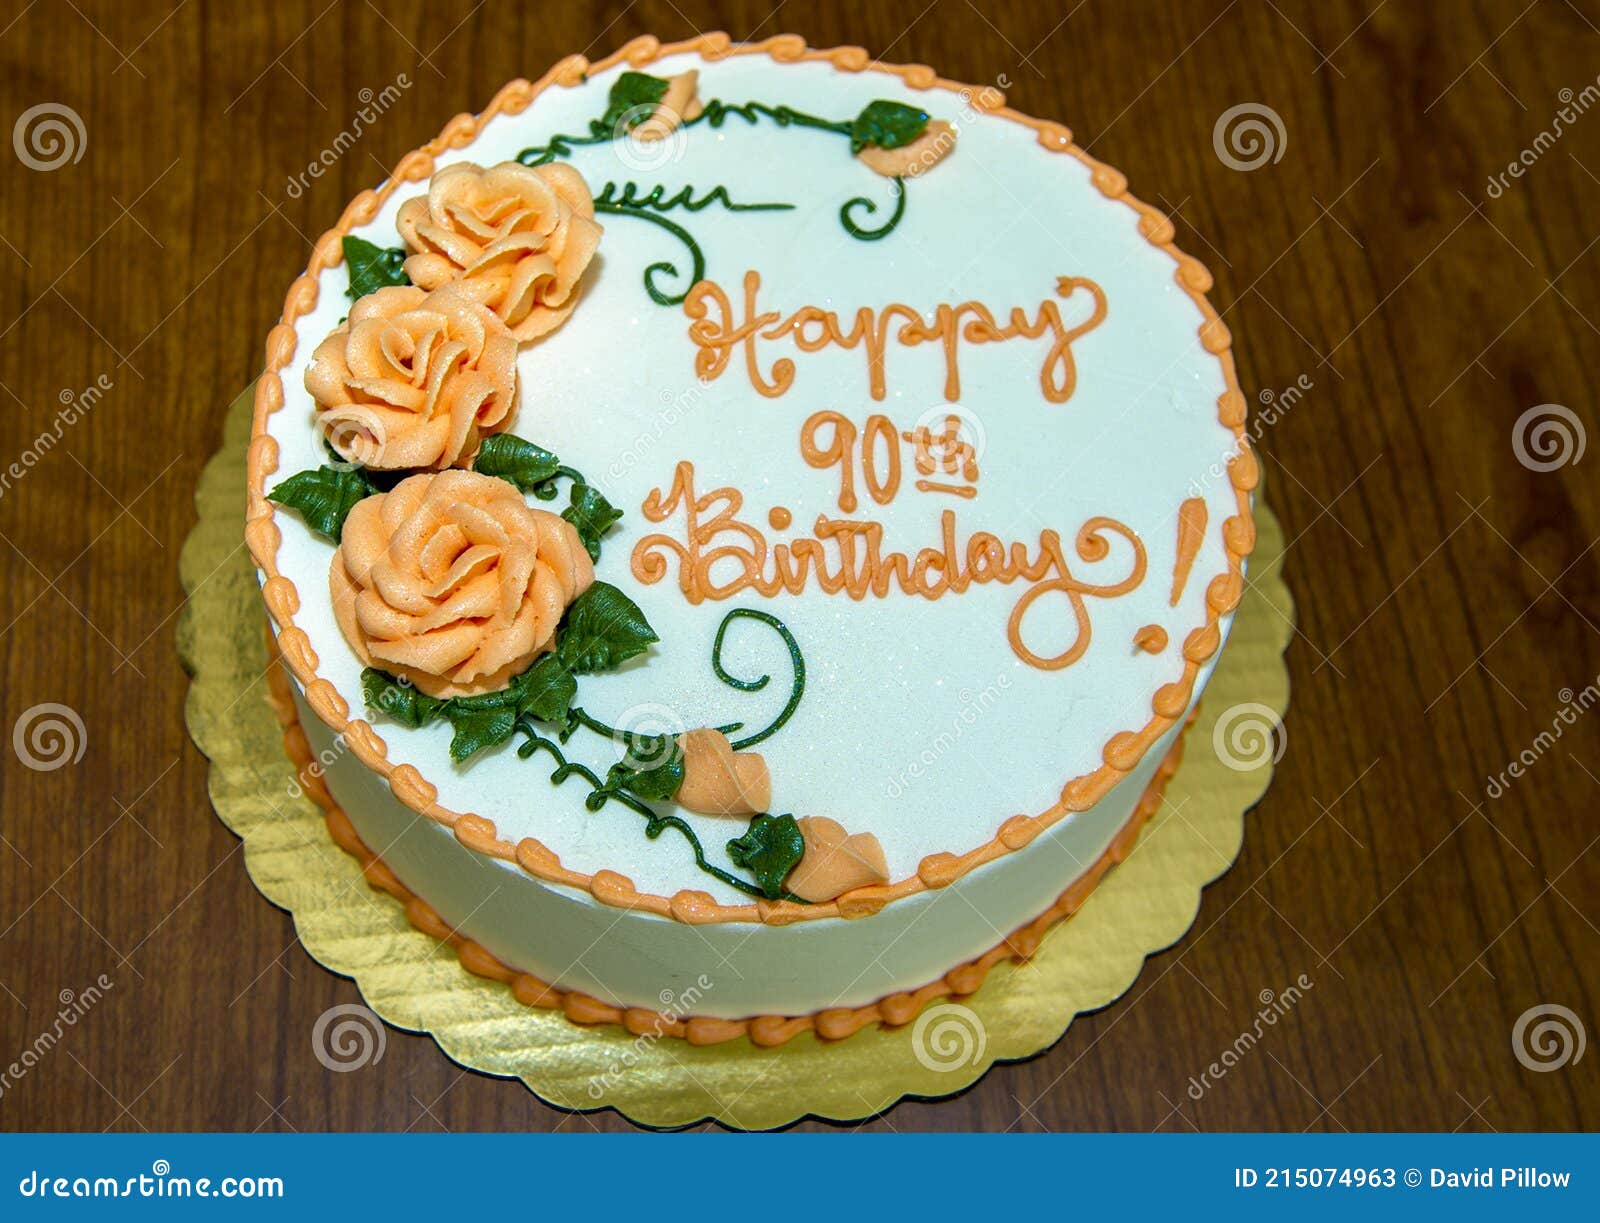 File:90th Birthday Cake.jpg - Wikimedia Commons